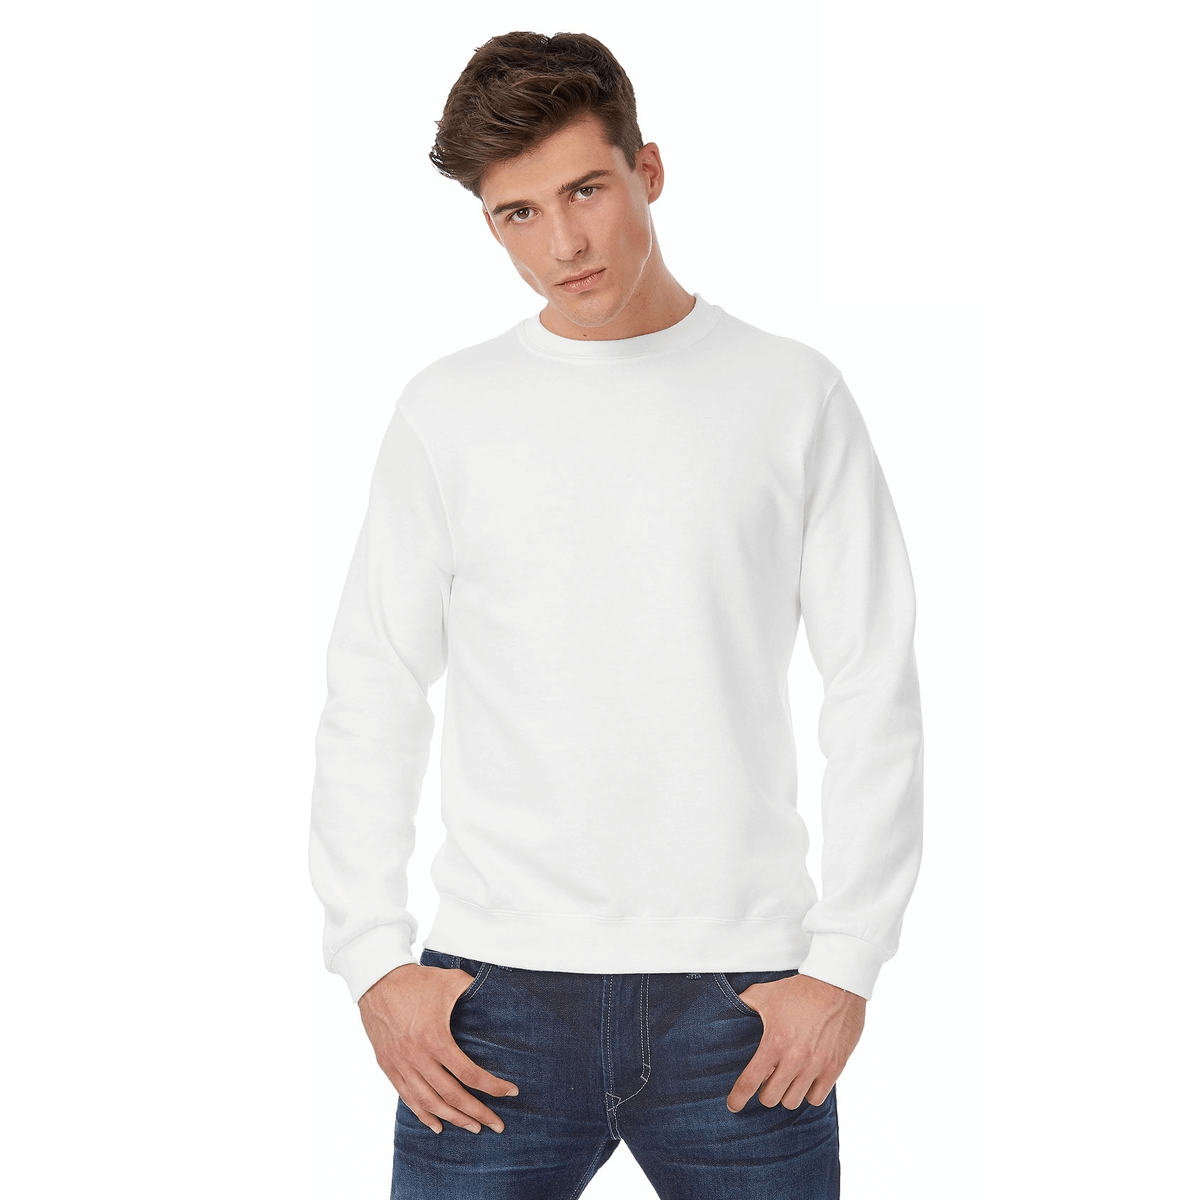 Basic sweater